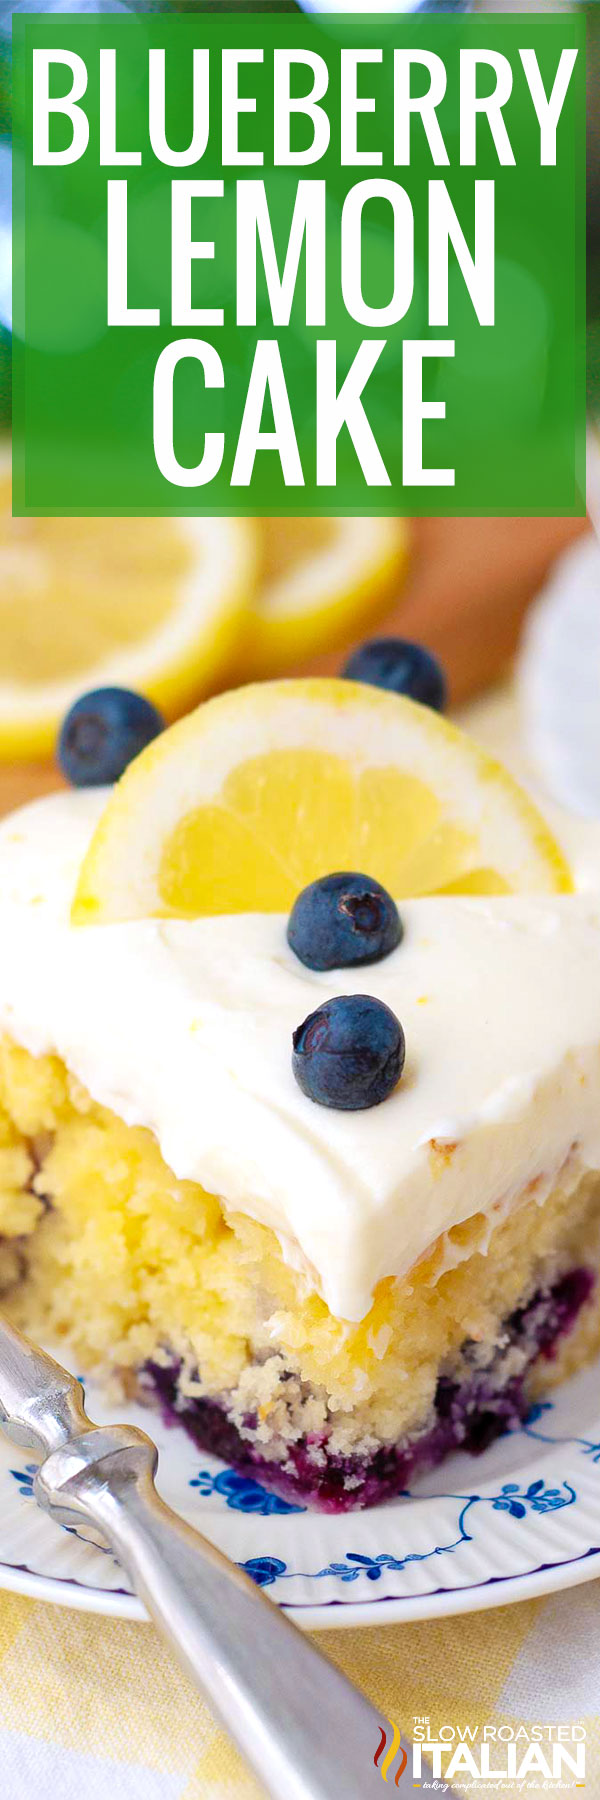 Blueberry Lemon Cake closeup